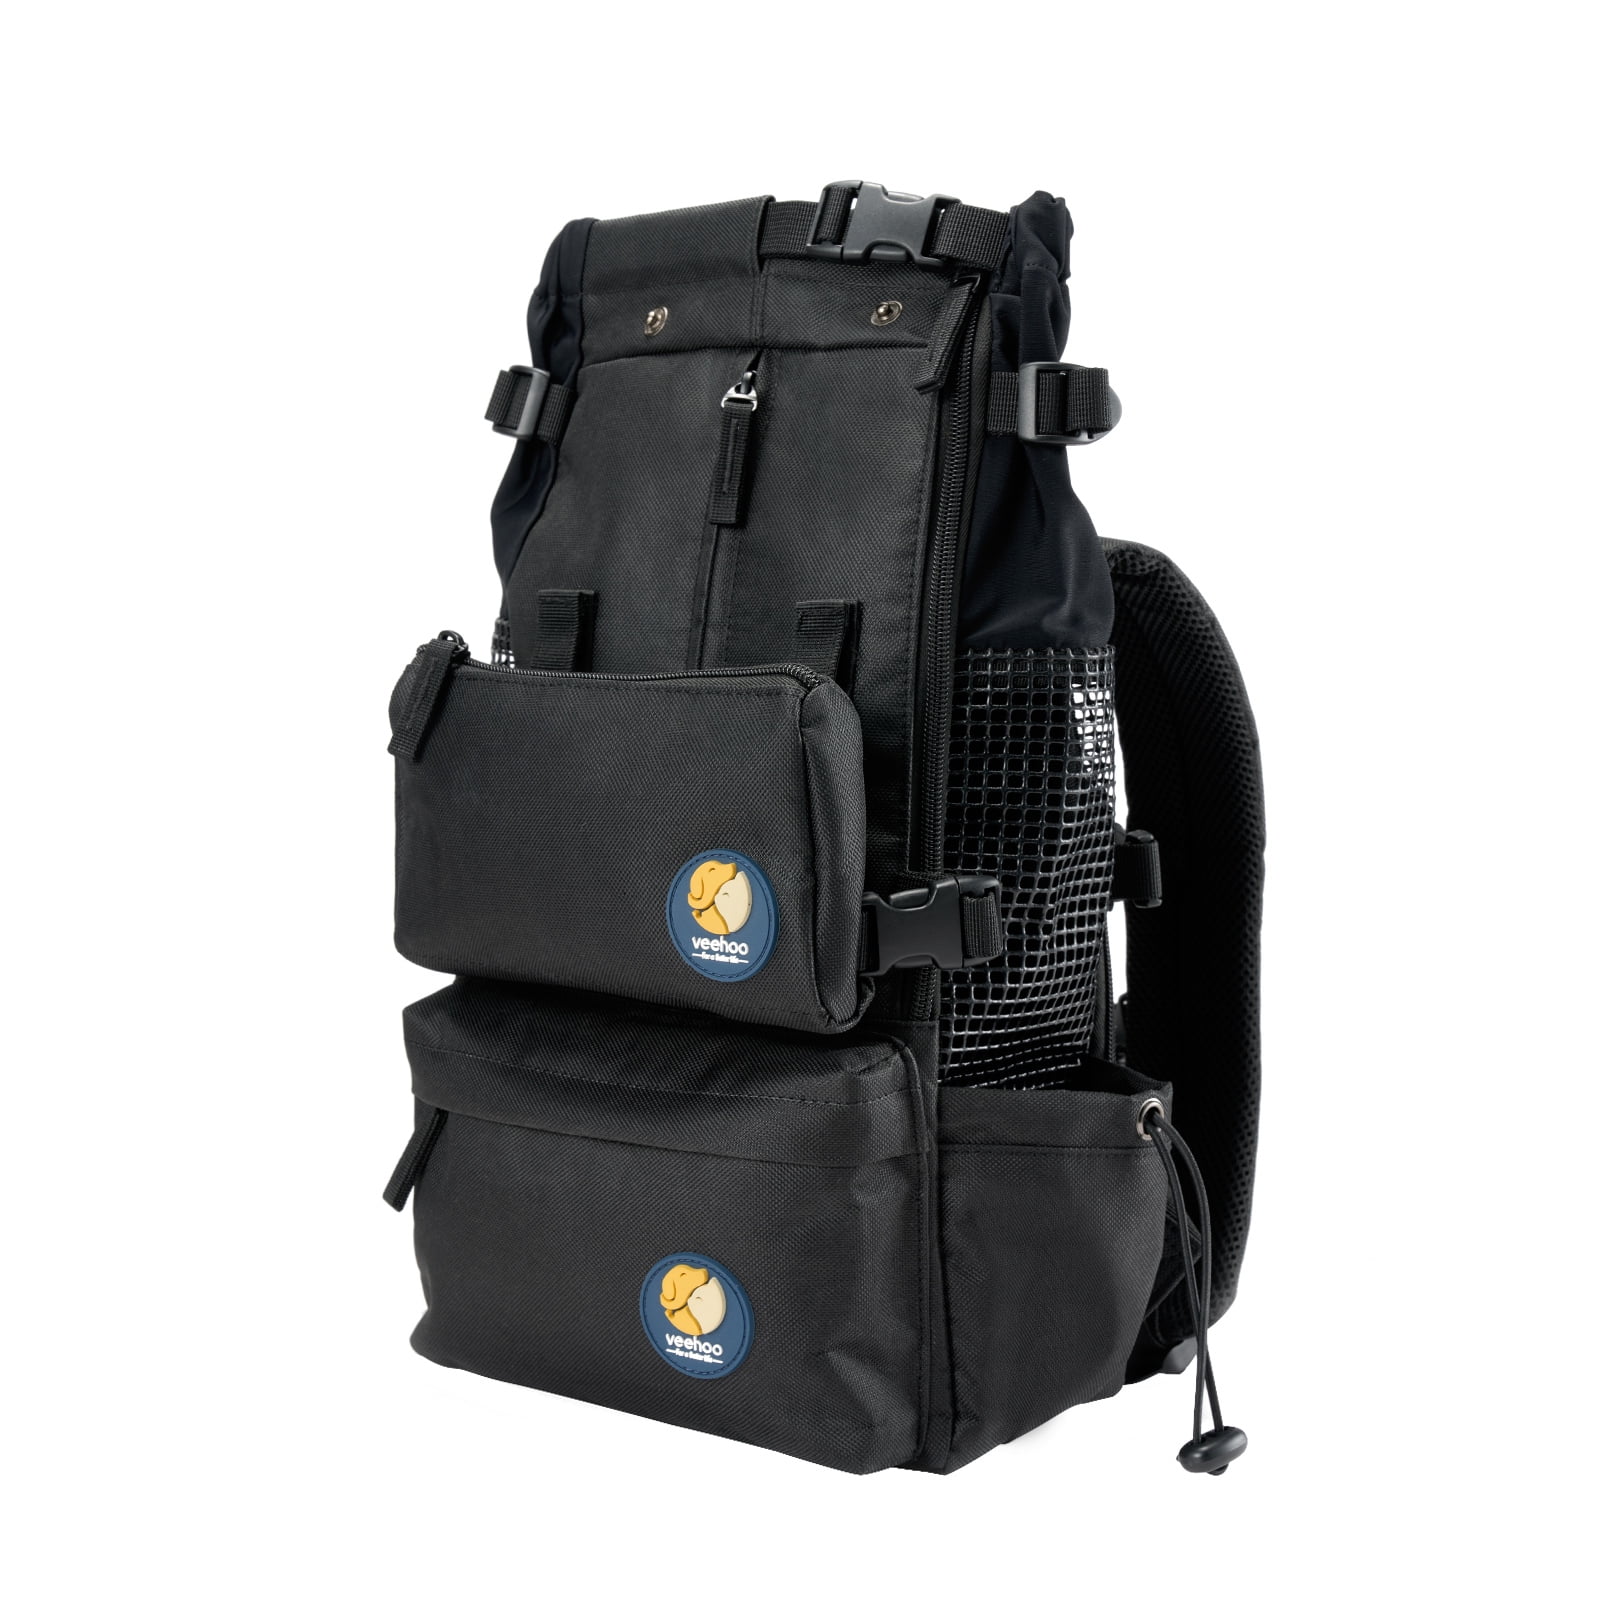 Poodles Dogs Pattern Backpack Travel Bags Bookbag,Lightweight Multi-Function Laptop Backpack